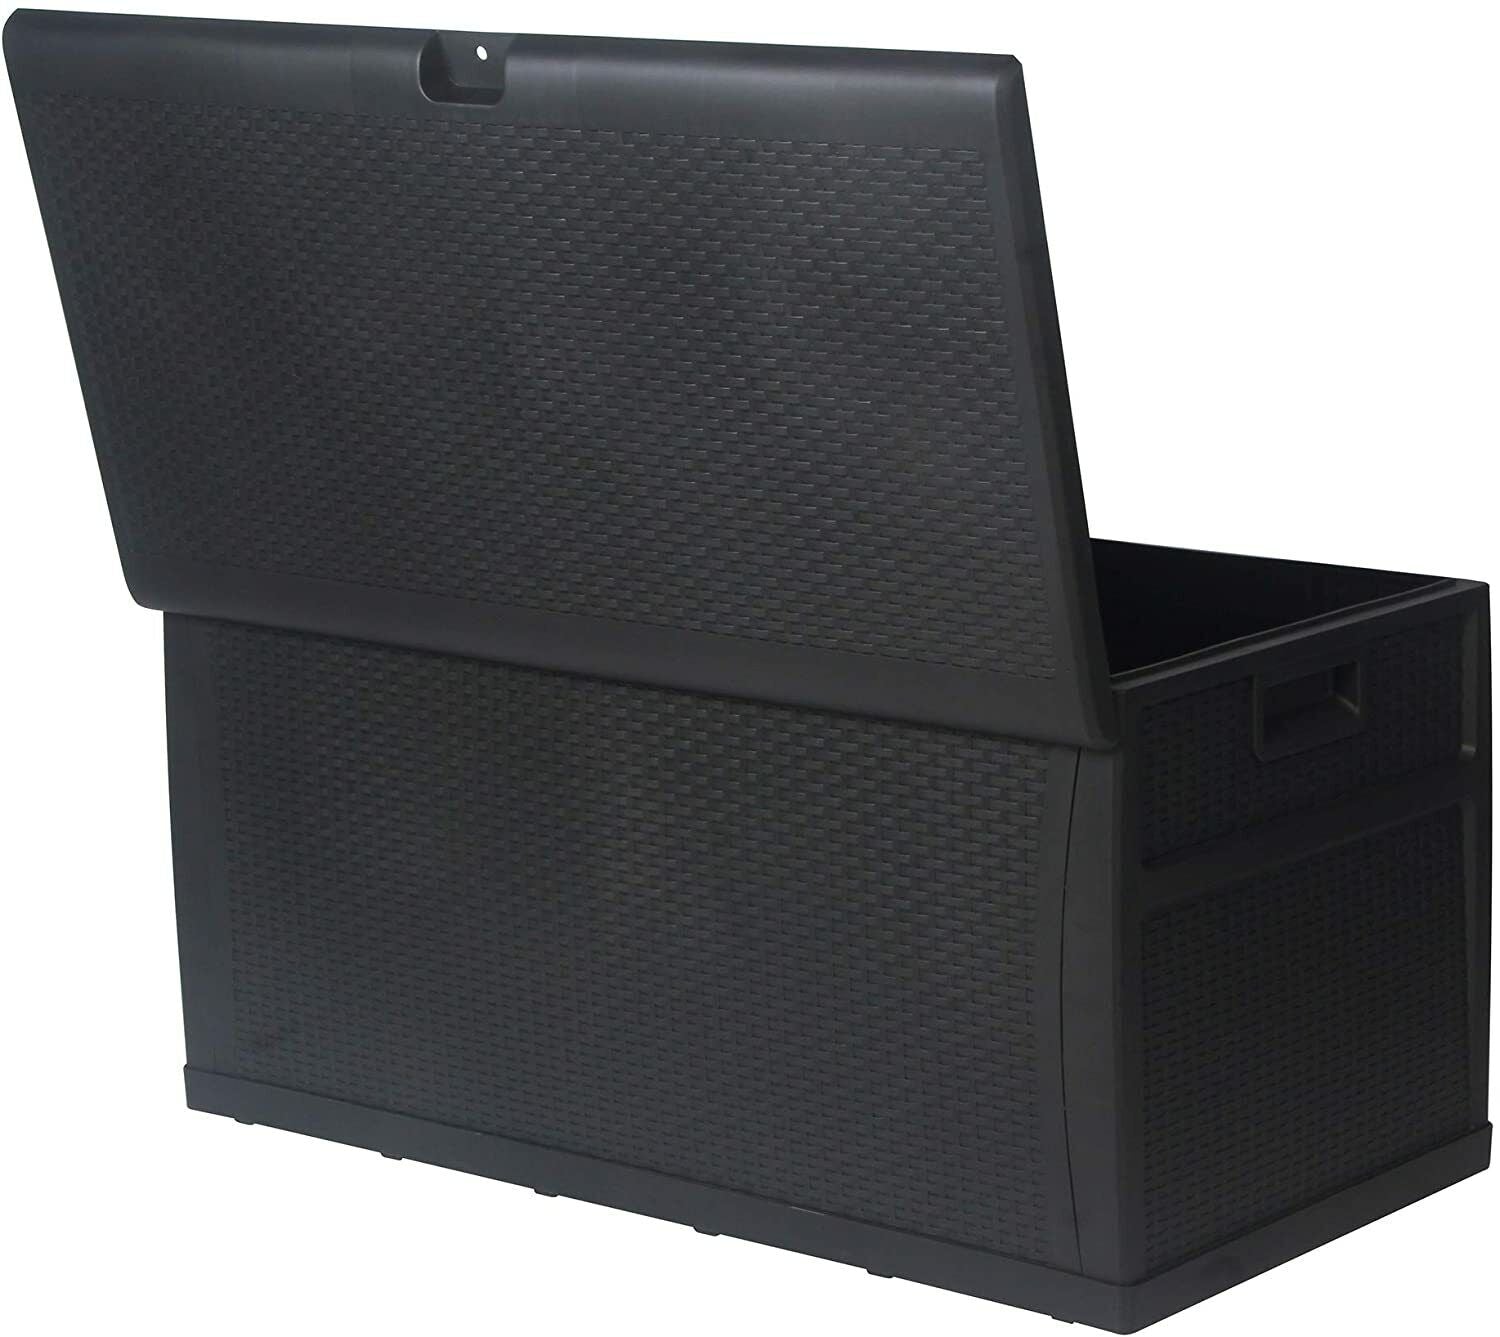 Patio Deck Box Storage Container Outdoor Rattan Style Plastic Storage Cabinet Bench Box